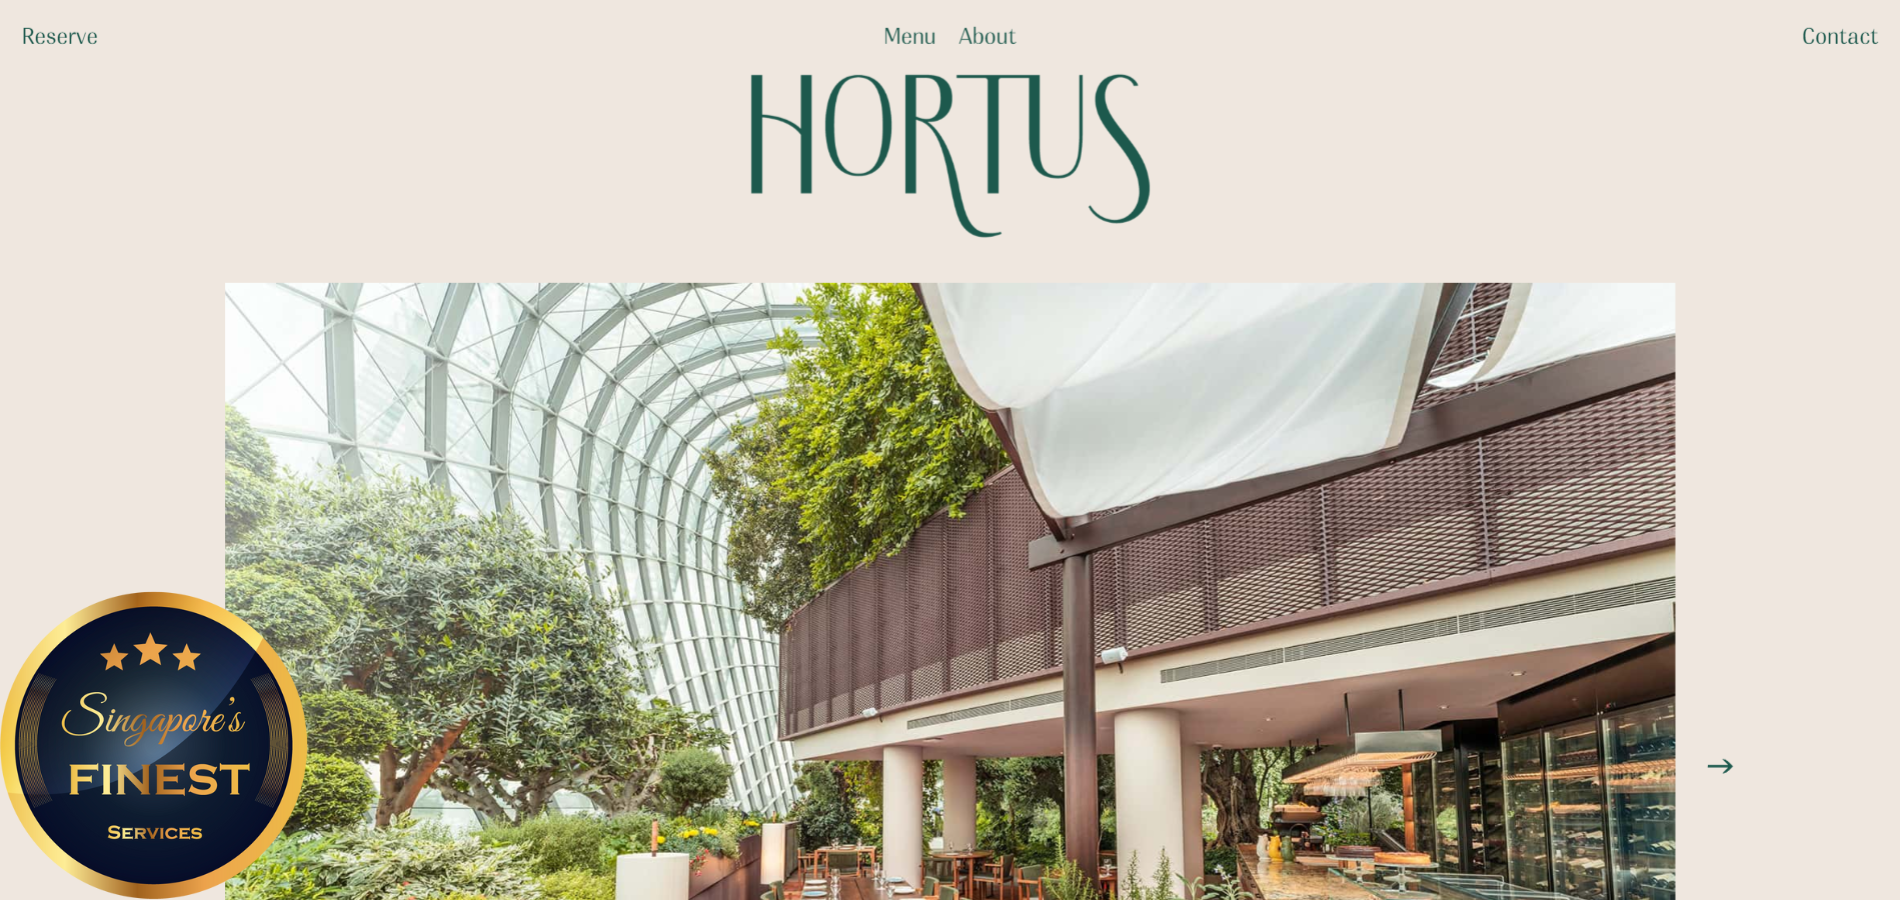 10 Best Garden Restaurants in Singapore